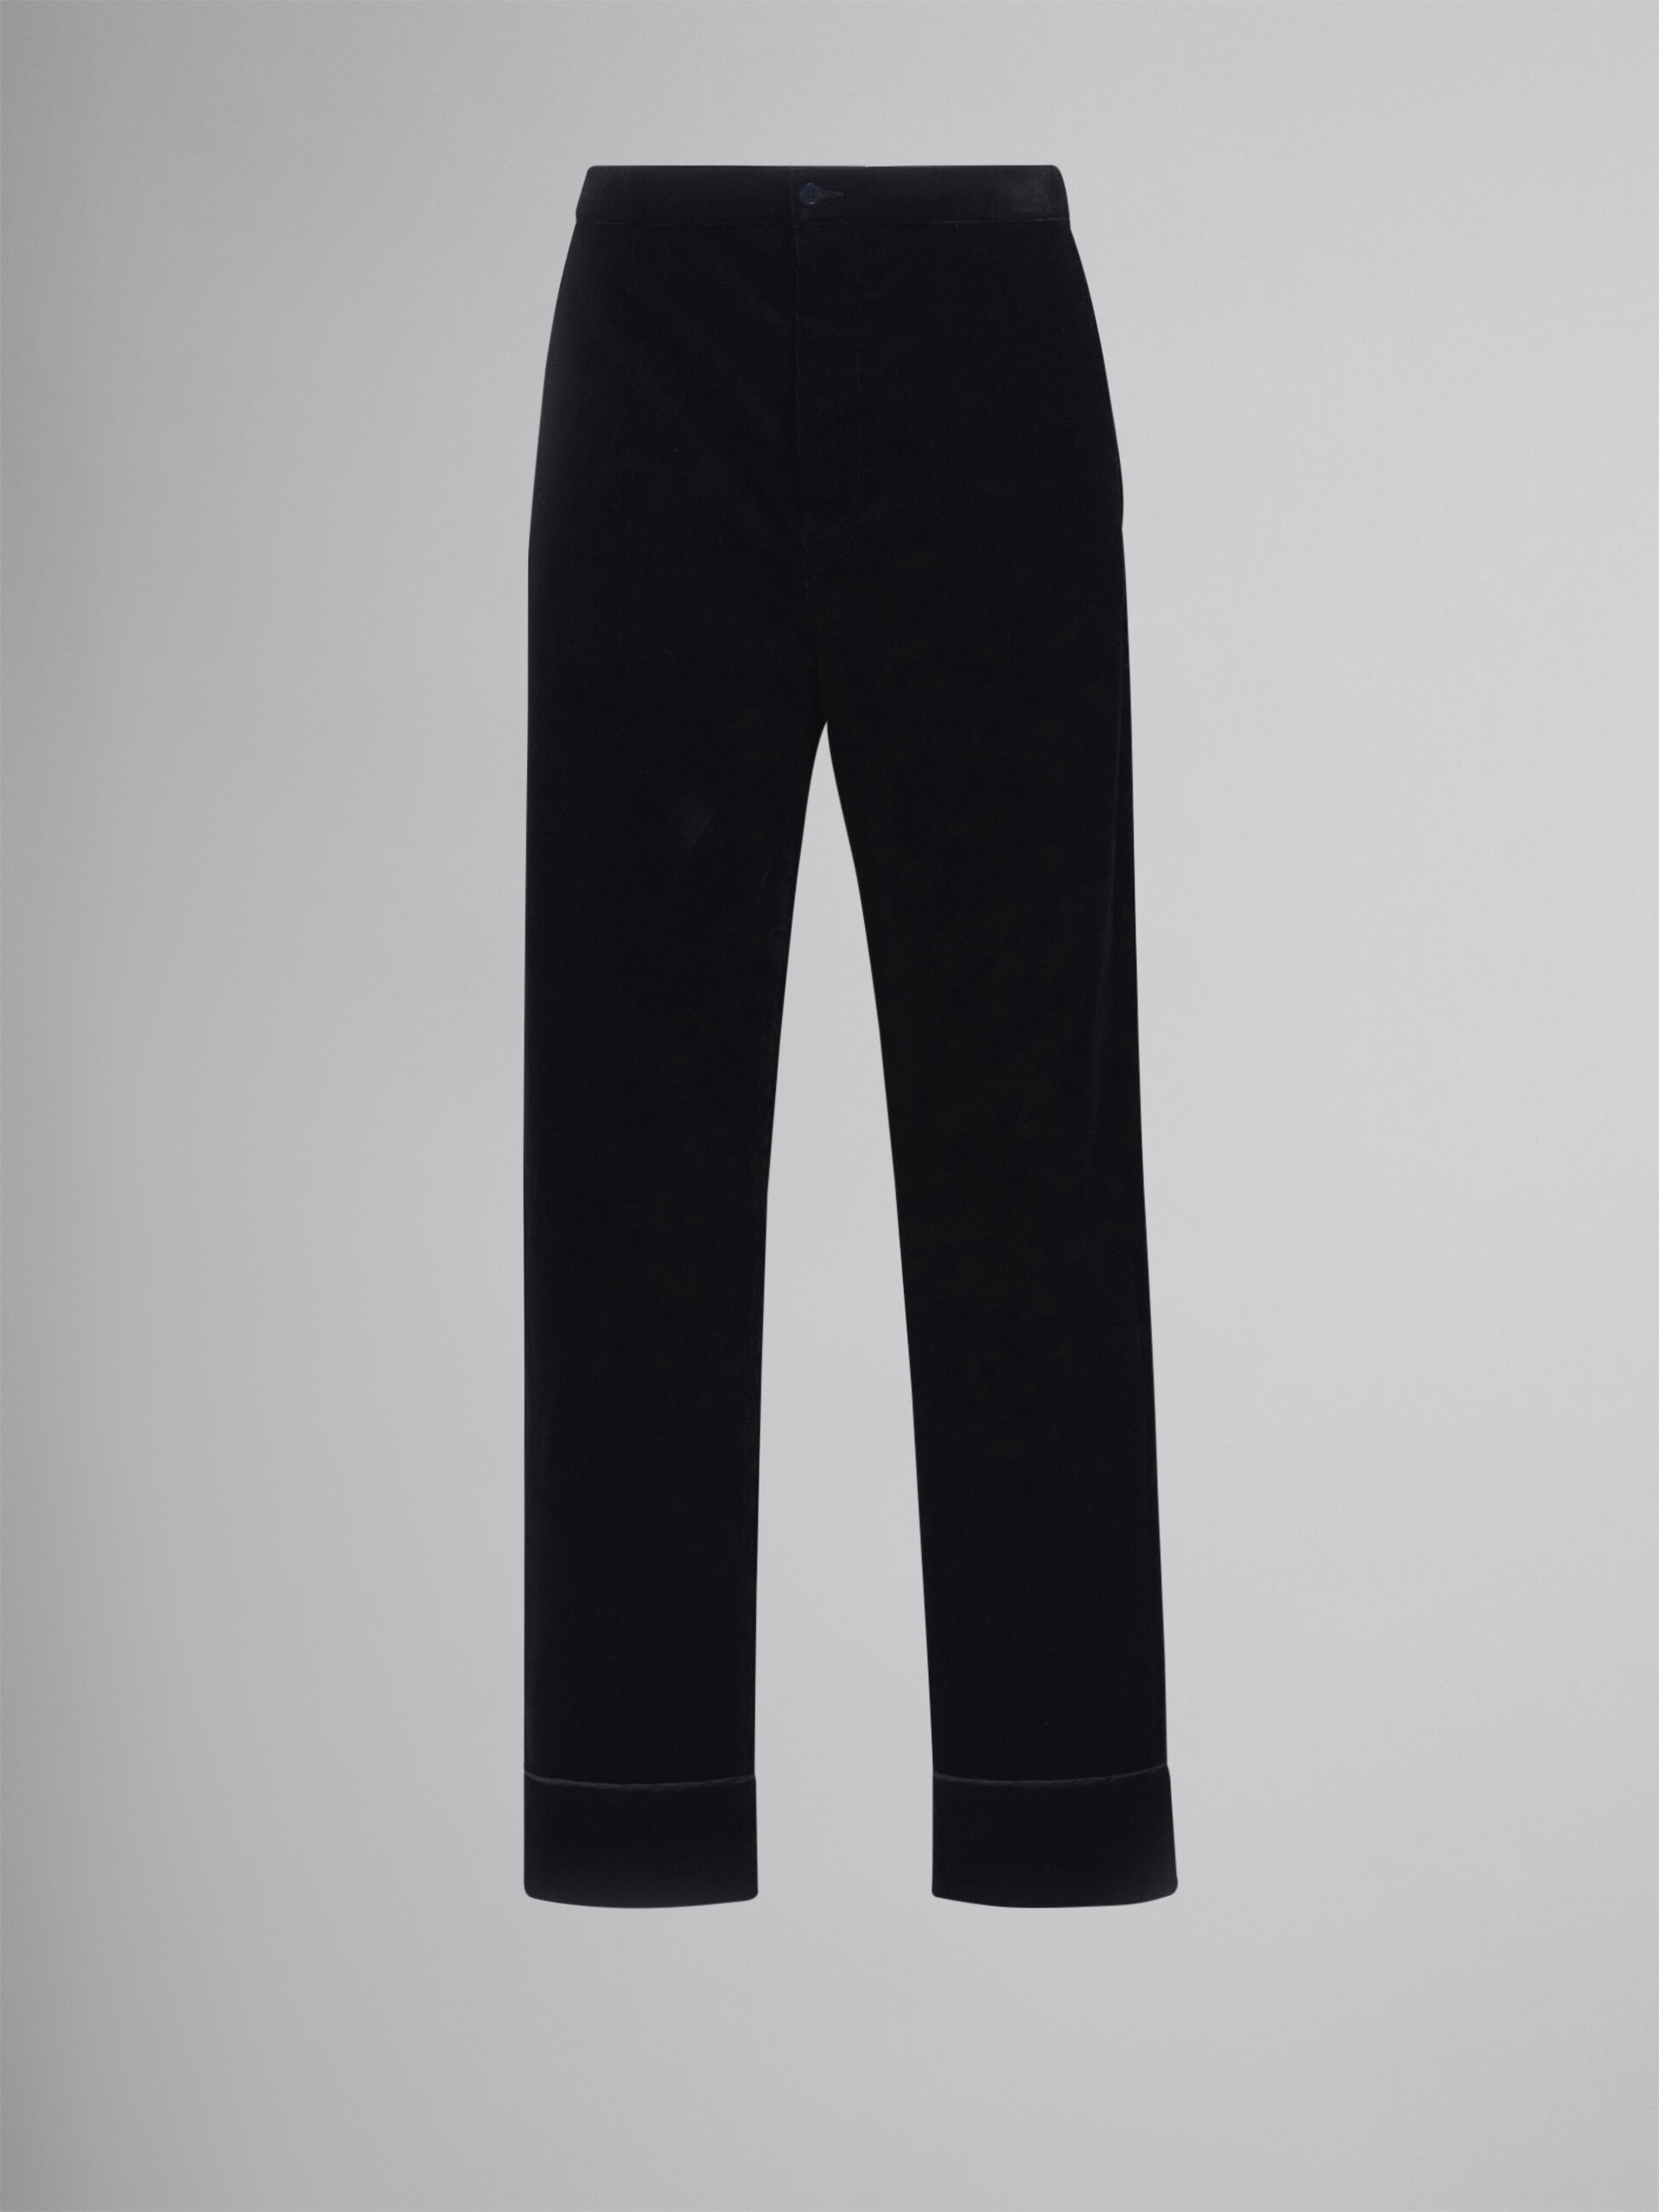 Fine wale corduroy pants - Pants - Image 1